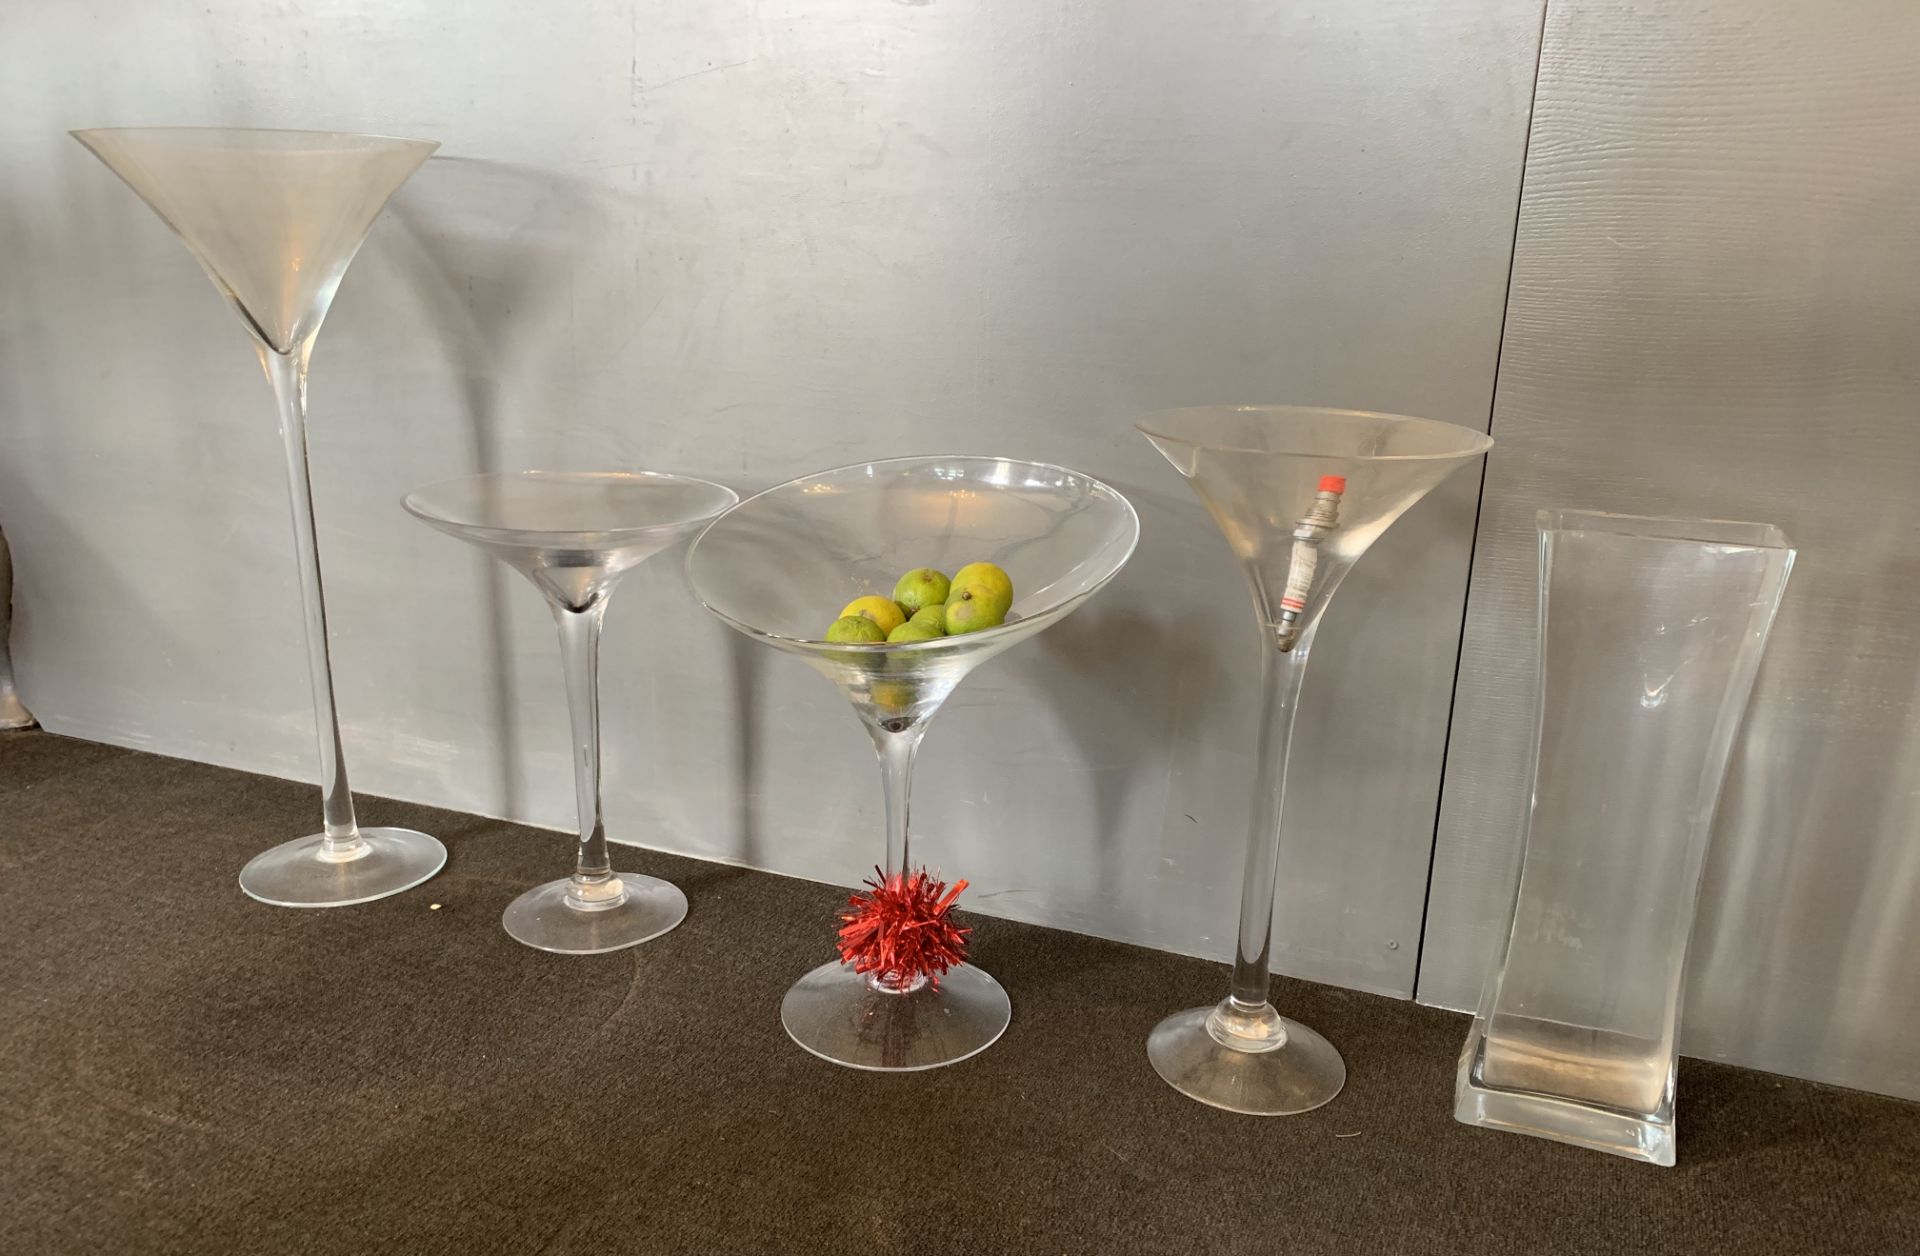 Four decorative oversize martini glasses and a glass vase (5)